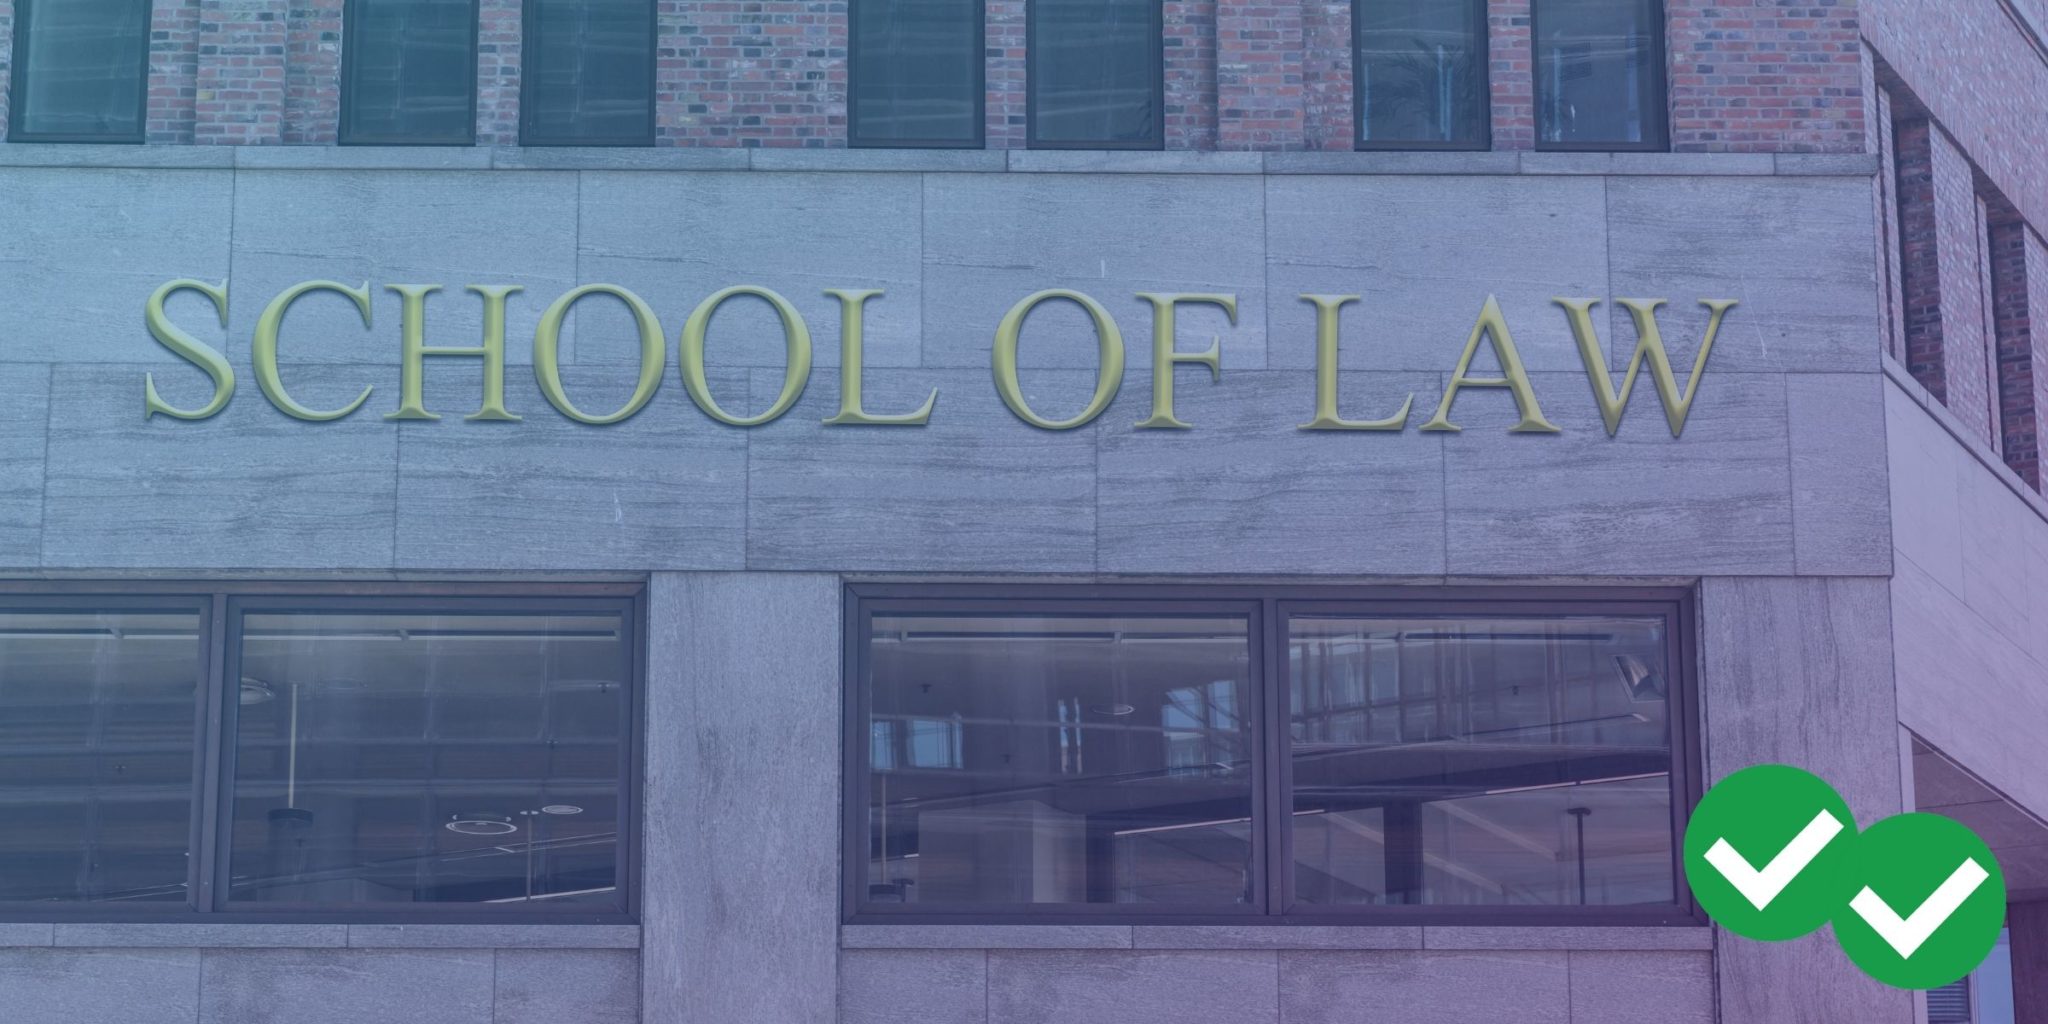 School of law